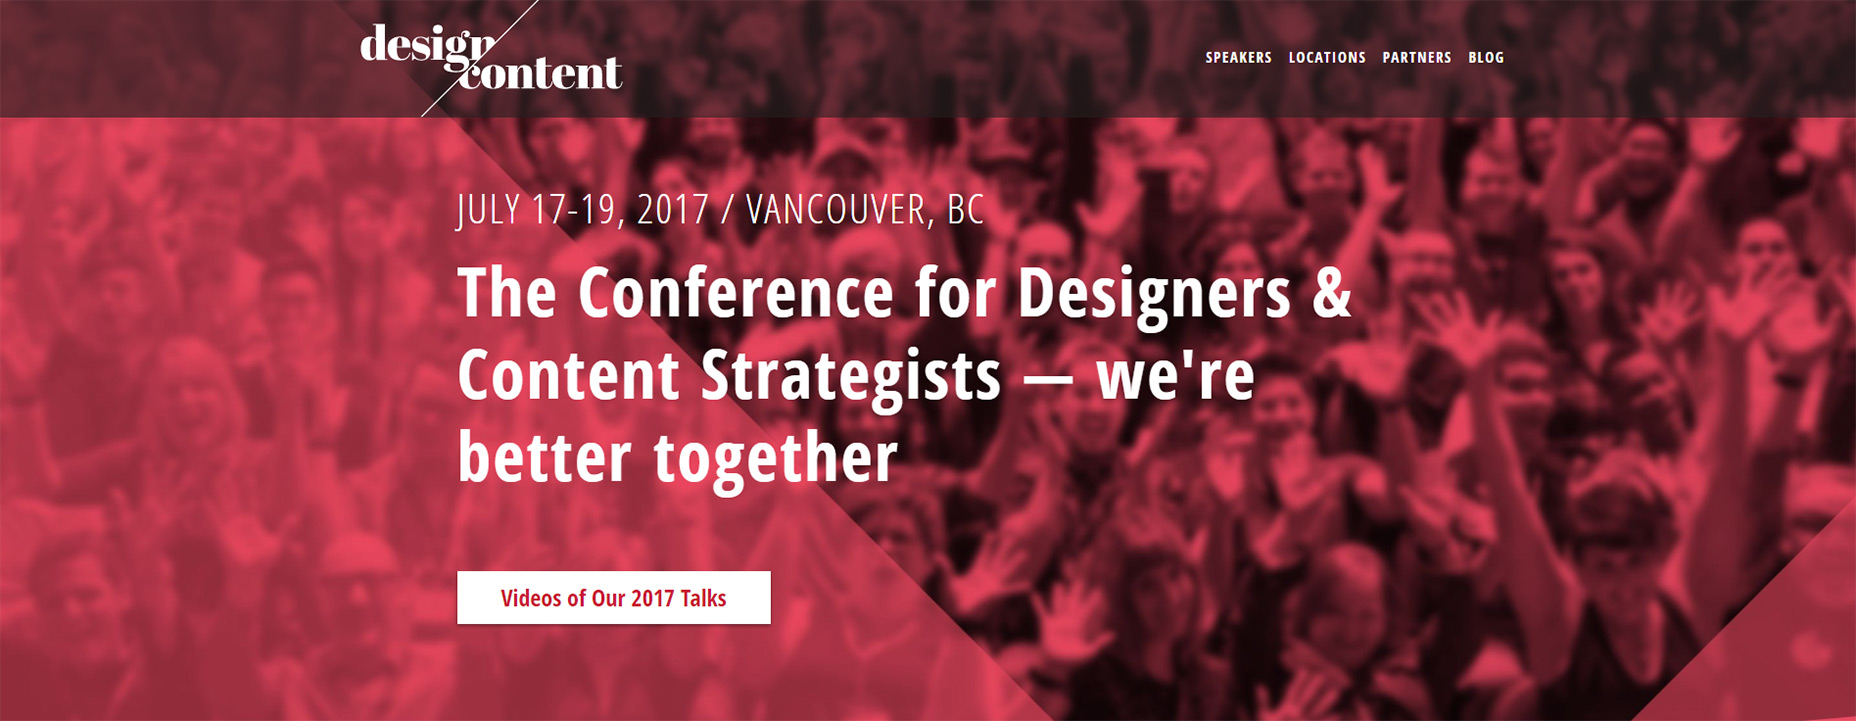 05-design-content-conference